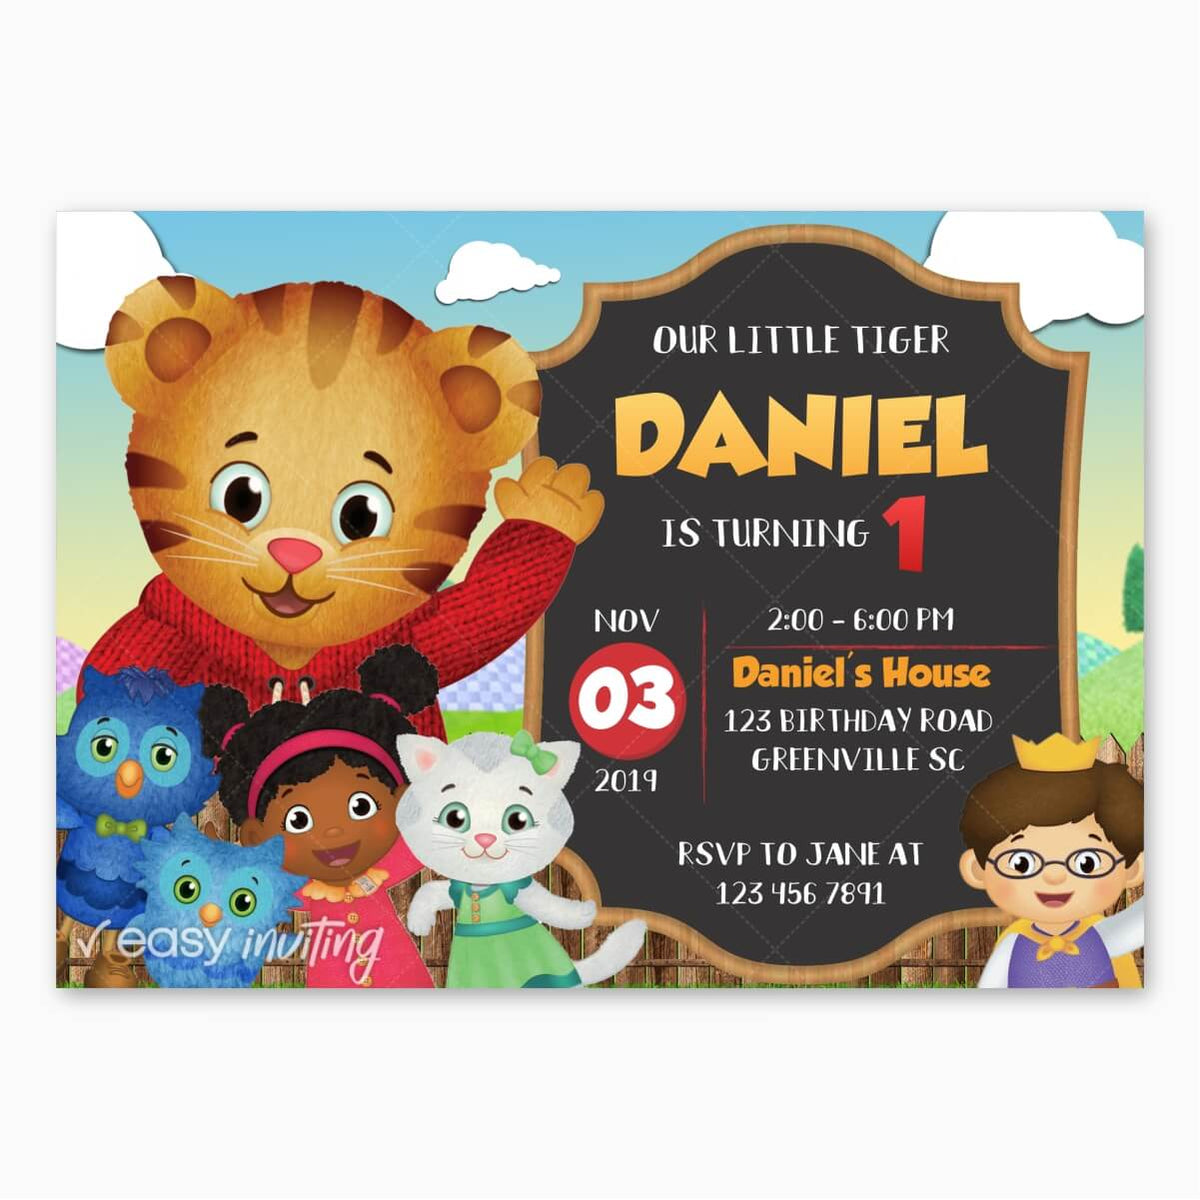 daniel-tiger-birthday-invitation-easy-inviting